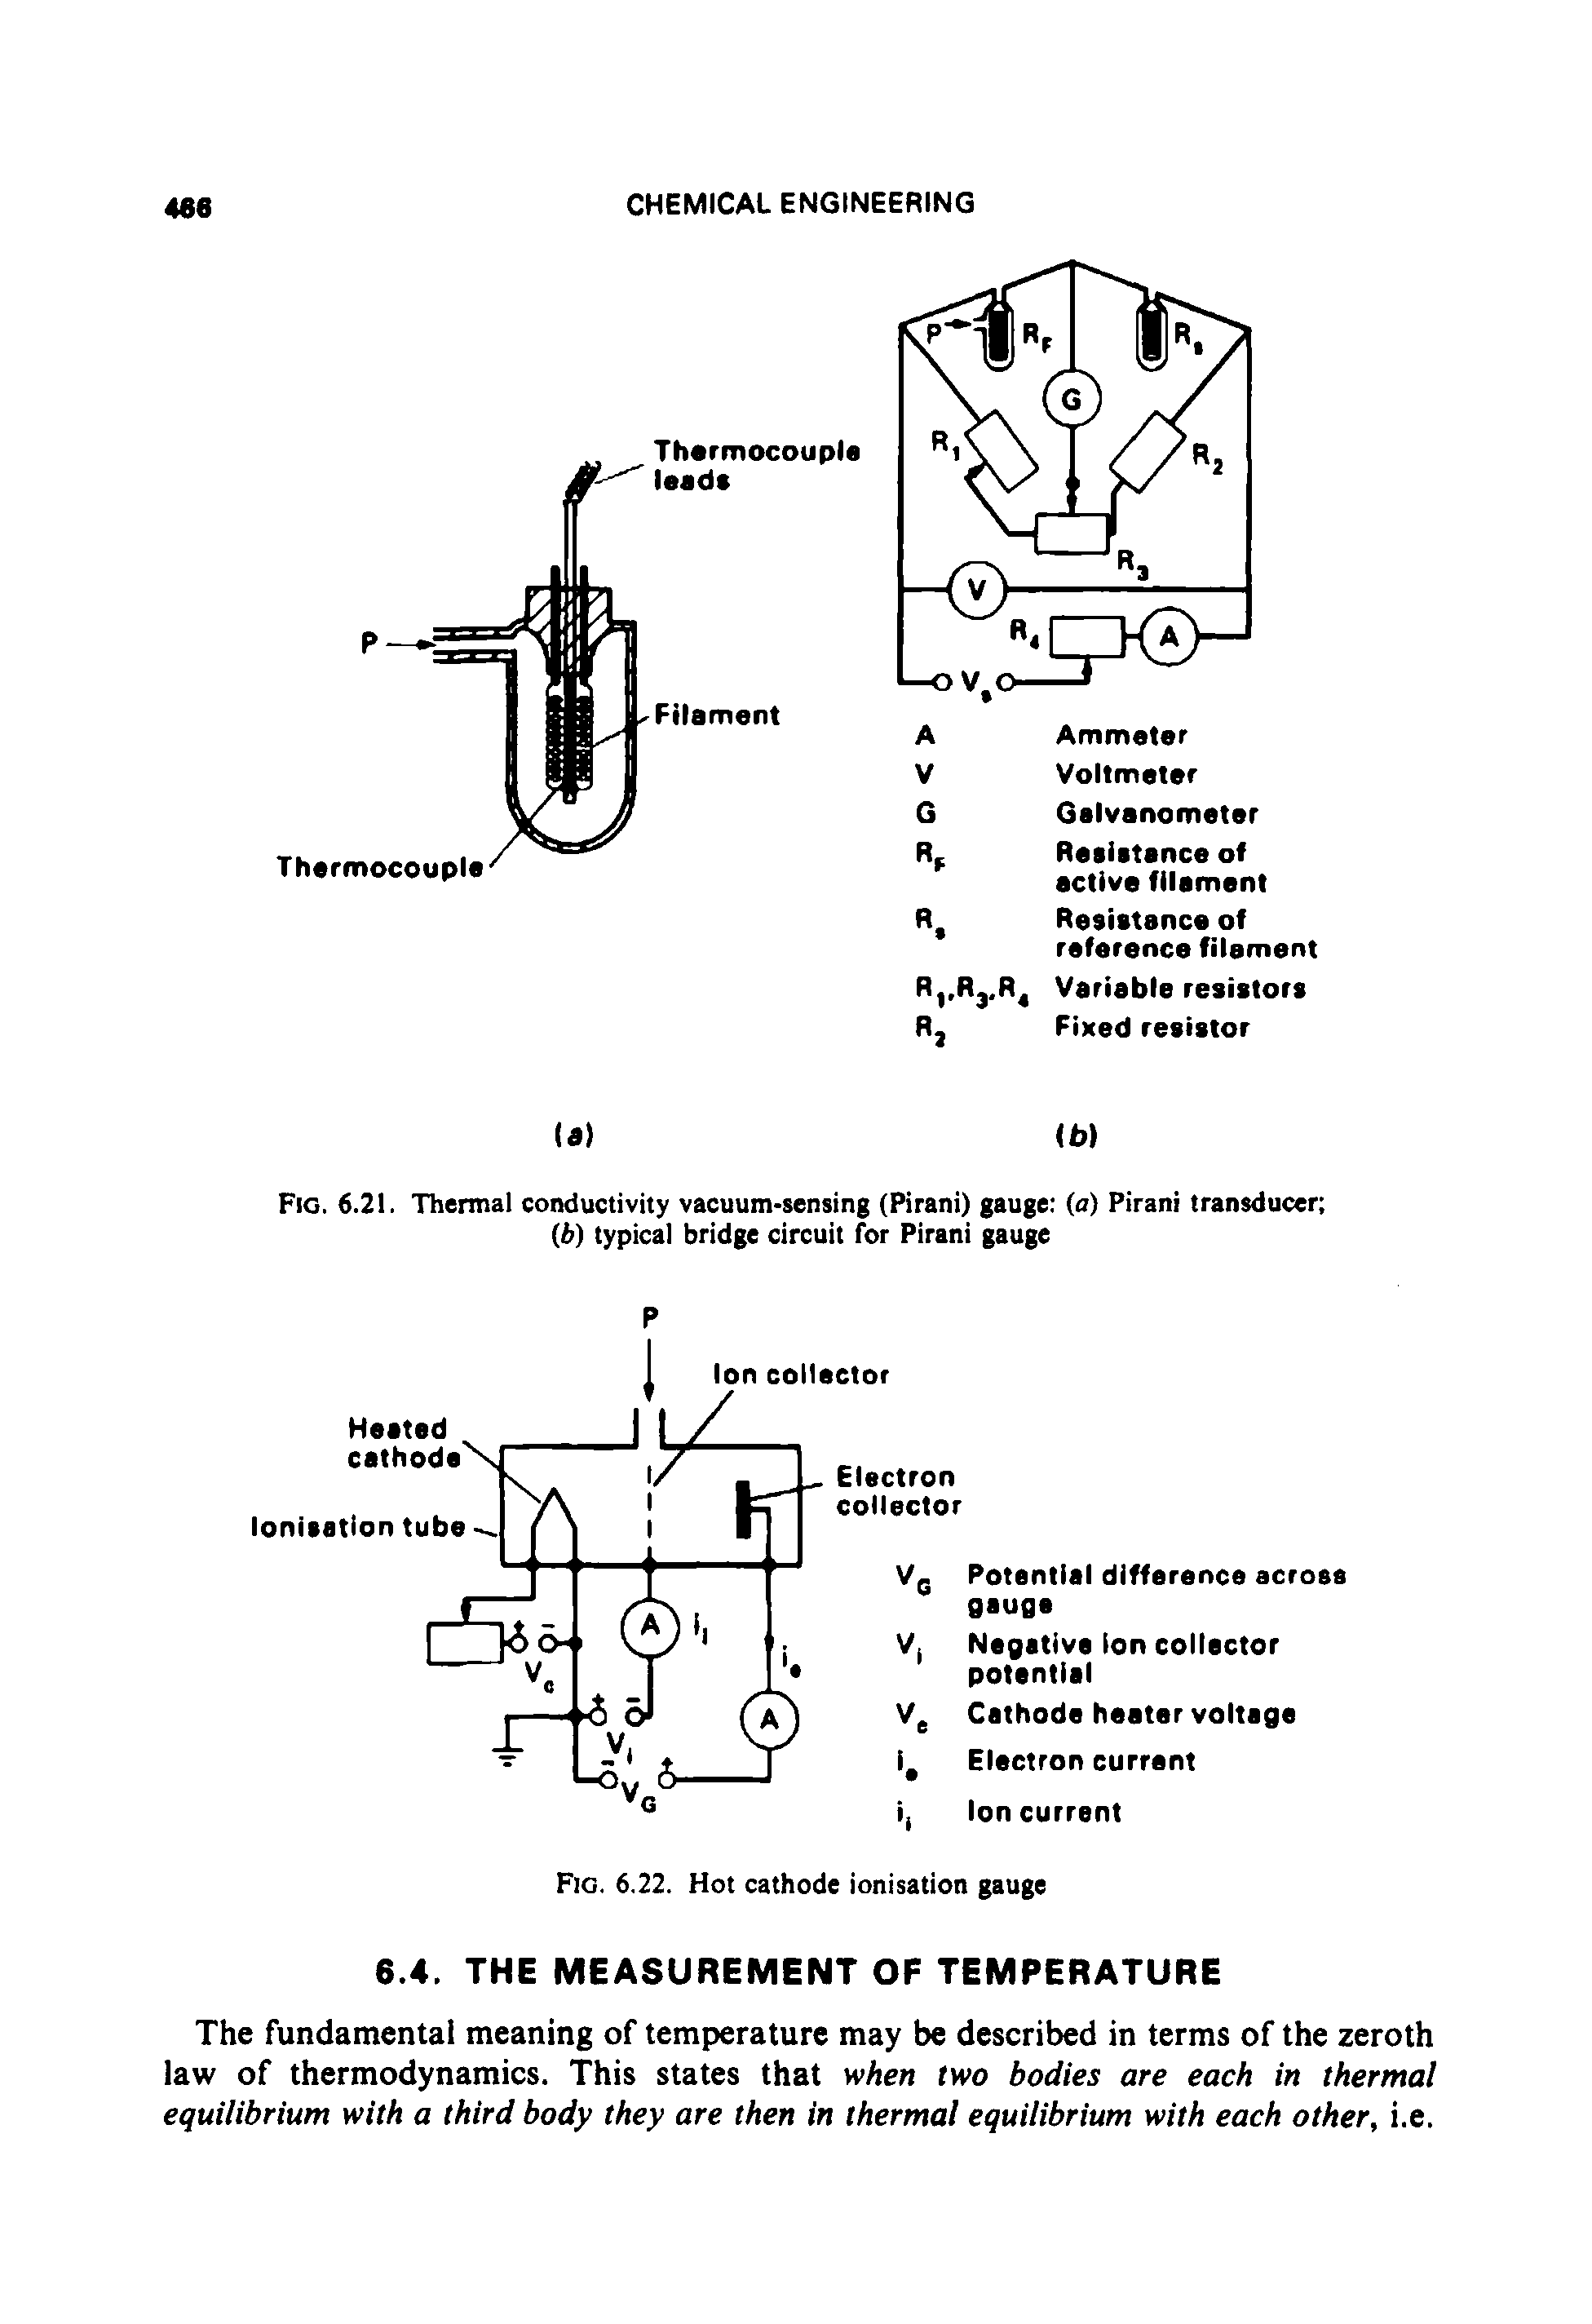 Fig. 6.21. Thermal conductivity vacuum-sensing (Pirani) gauge (a) Pirani transducer (6) typical bridge circuit for Pirani gauge...